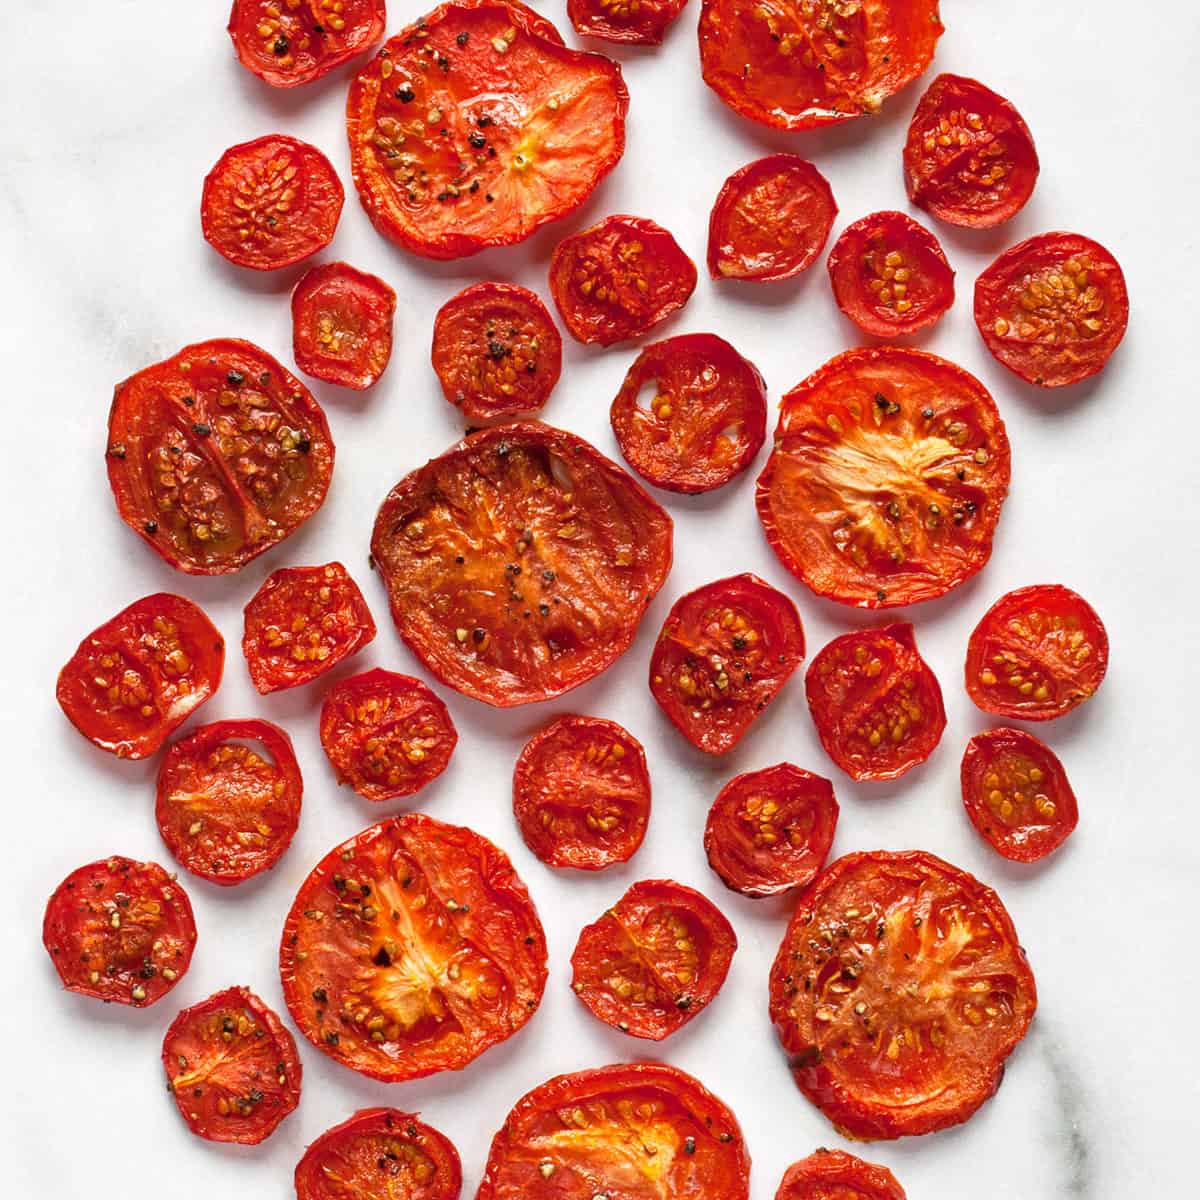 https://www.lastingredient.com/wp-content/uploads/2020/05/oven-roasted-tomatoes1.jpg